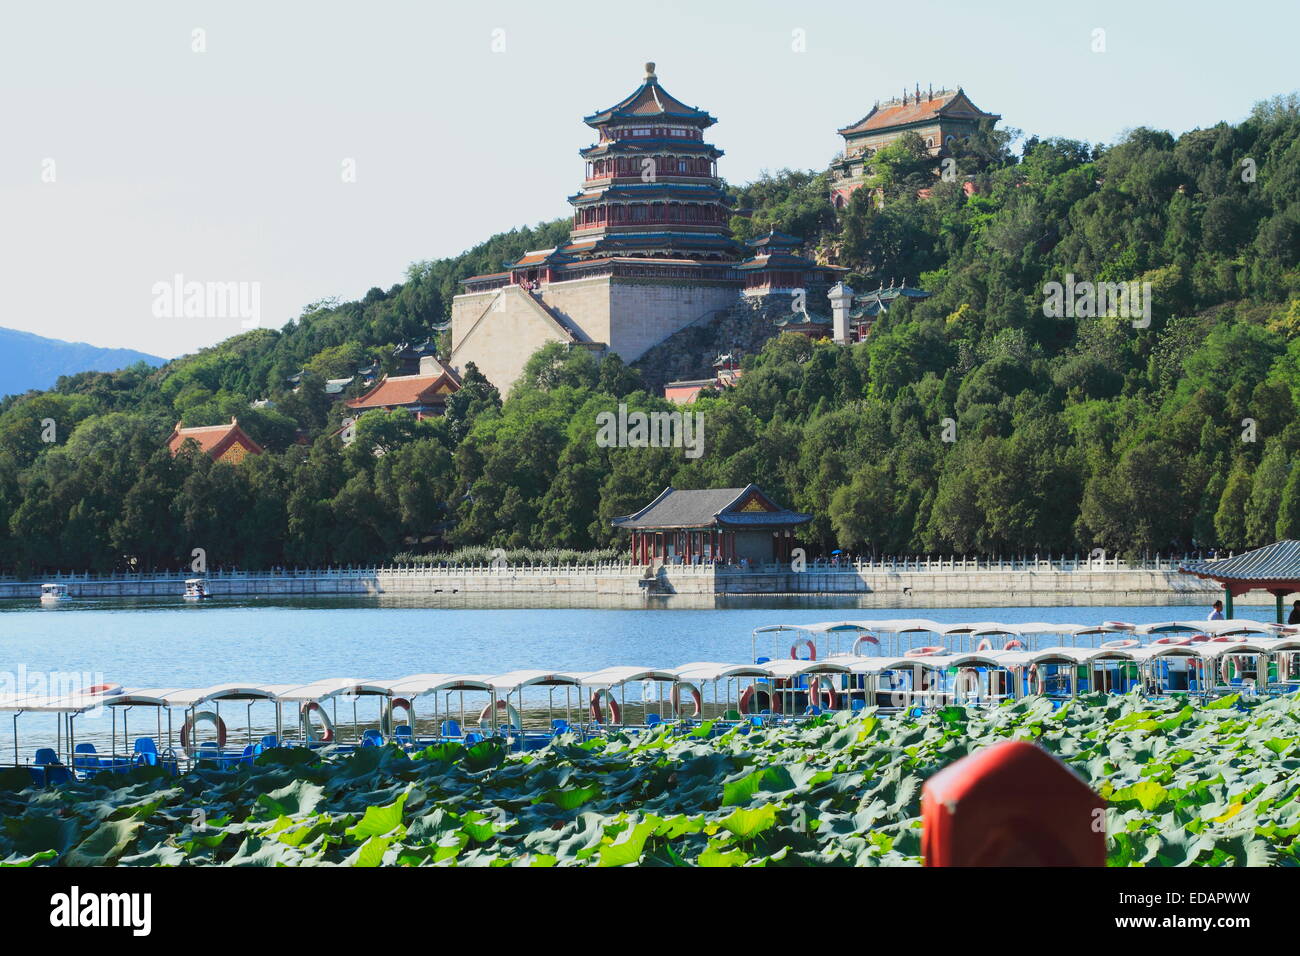 Chinese Imperial Summer Palace & garden. The Hall of Benevolence and Longevity Kunming Lake, Beijing China Stock Photo